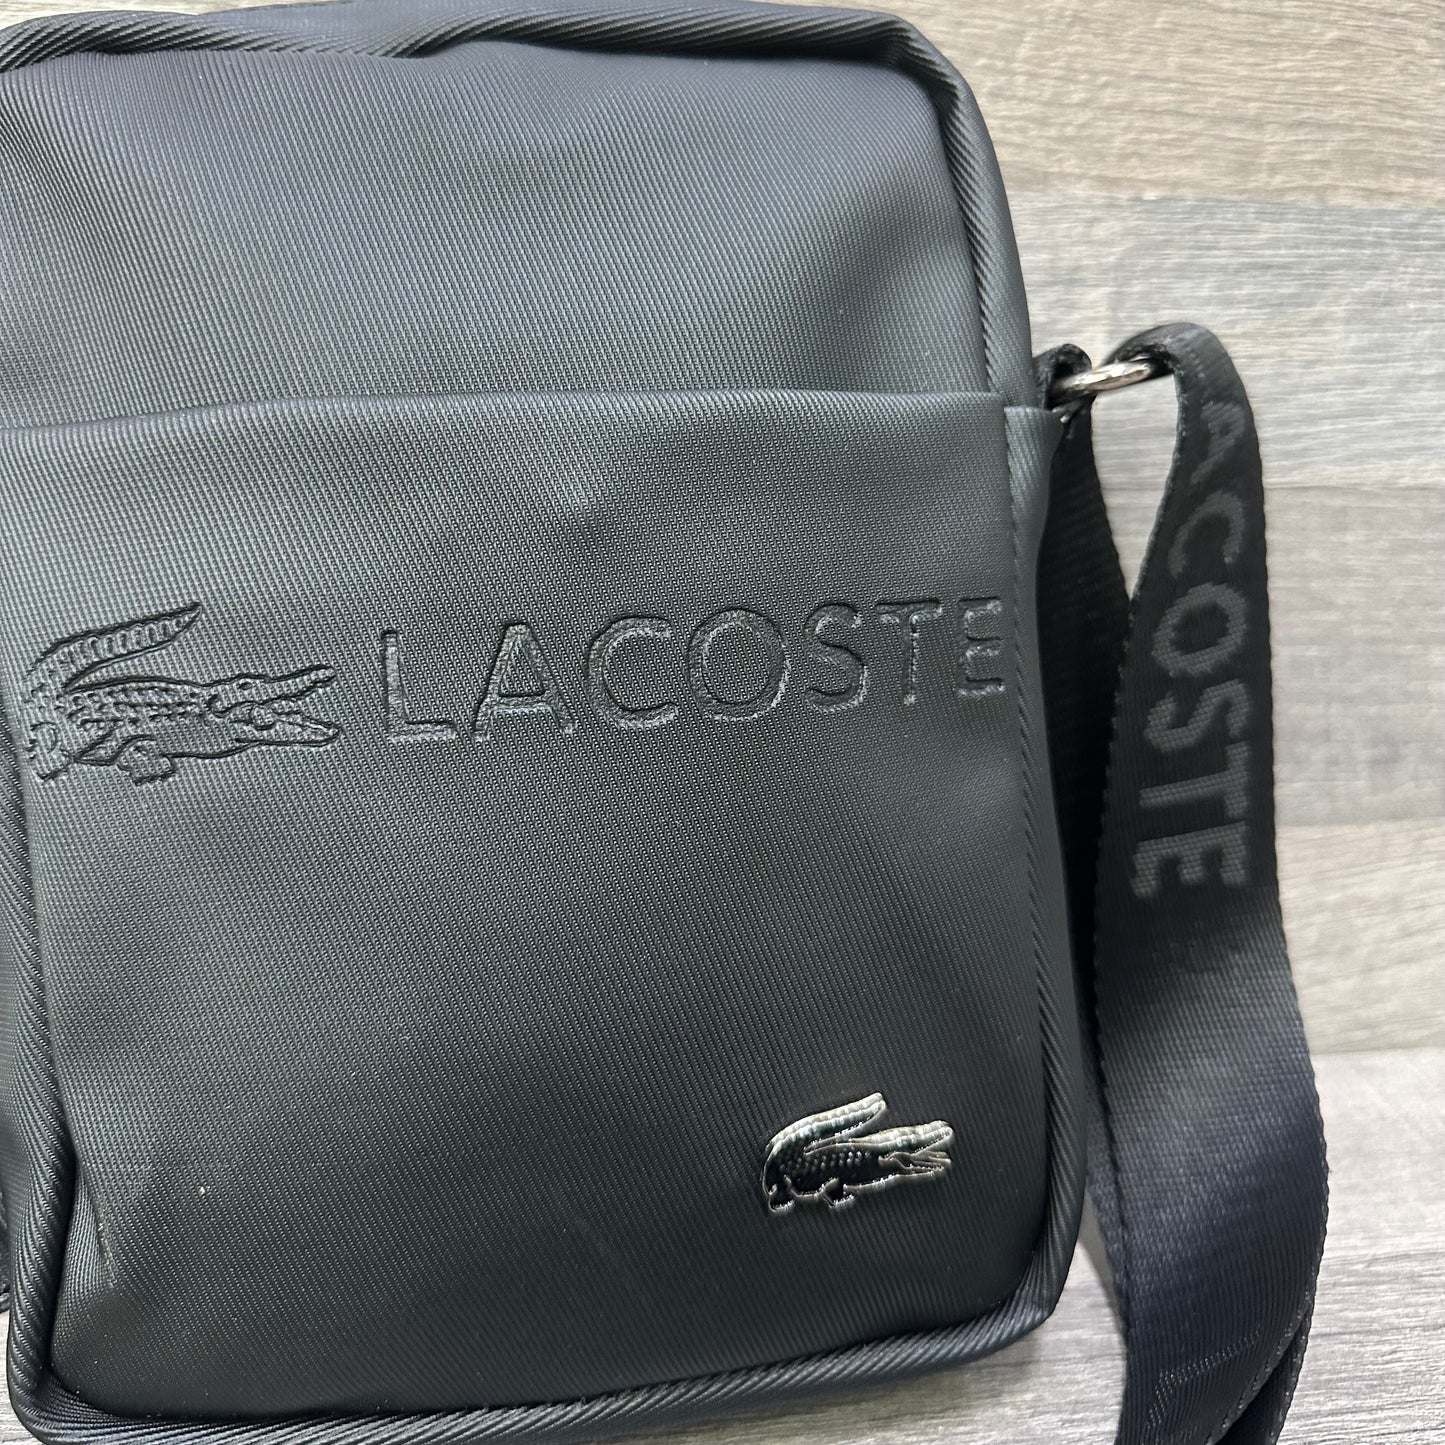 Lacoste Classic Black 08 mens bags